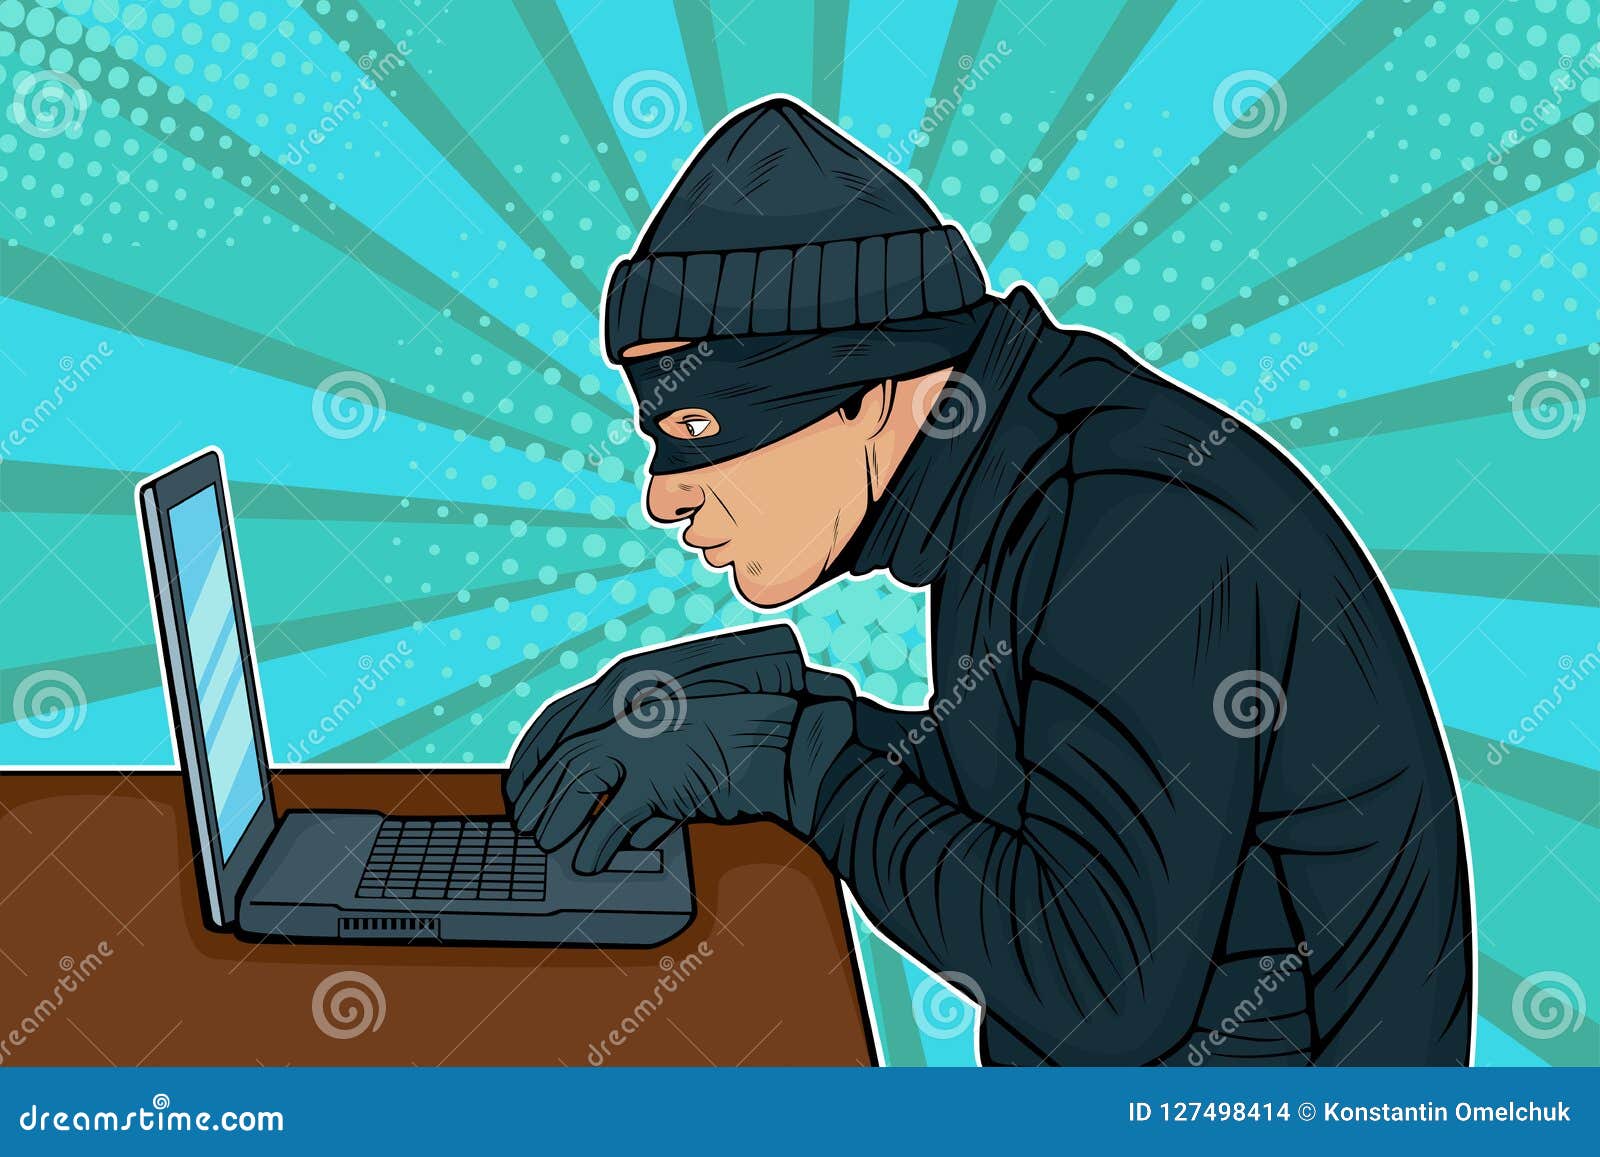 pop art hacker thief hacking into a computer